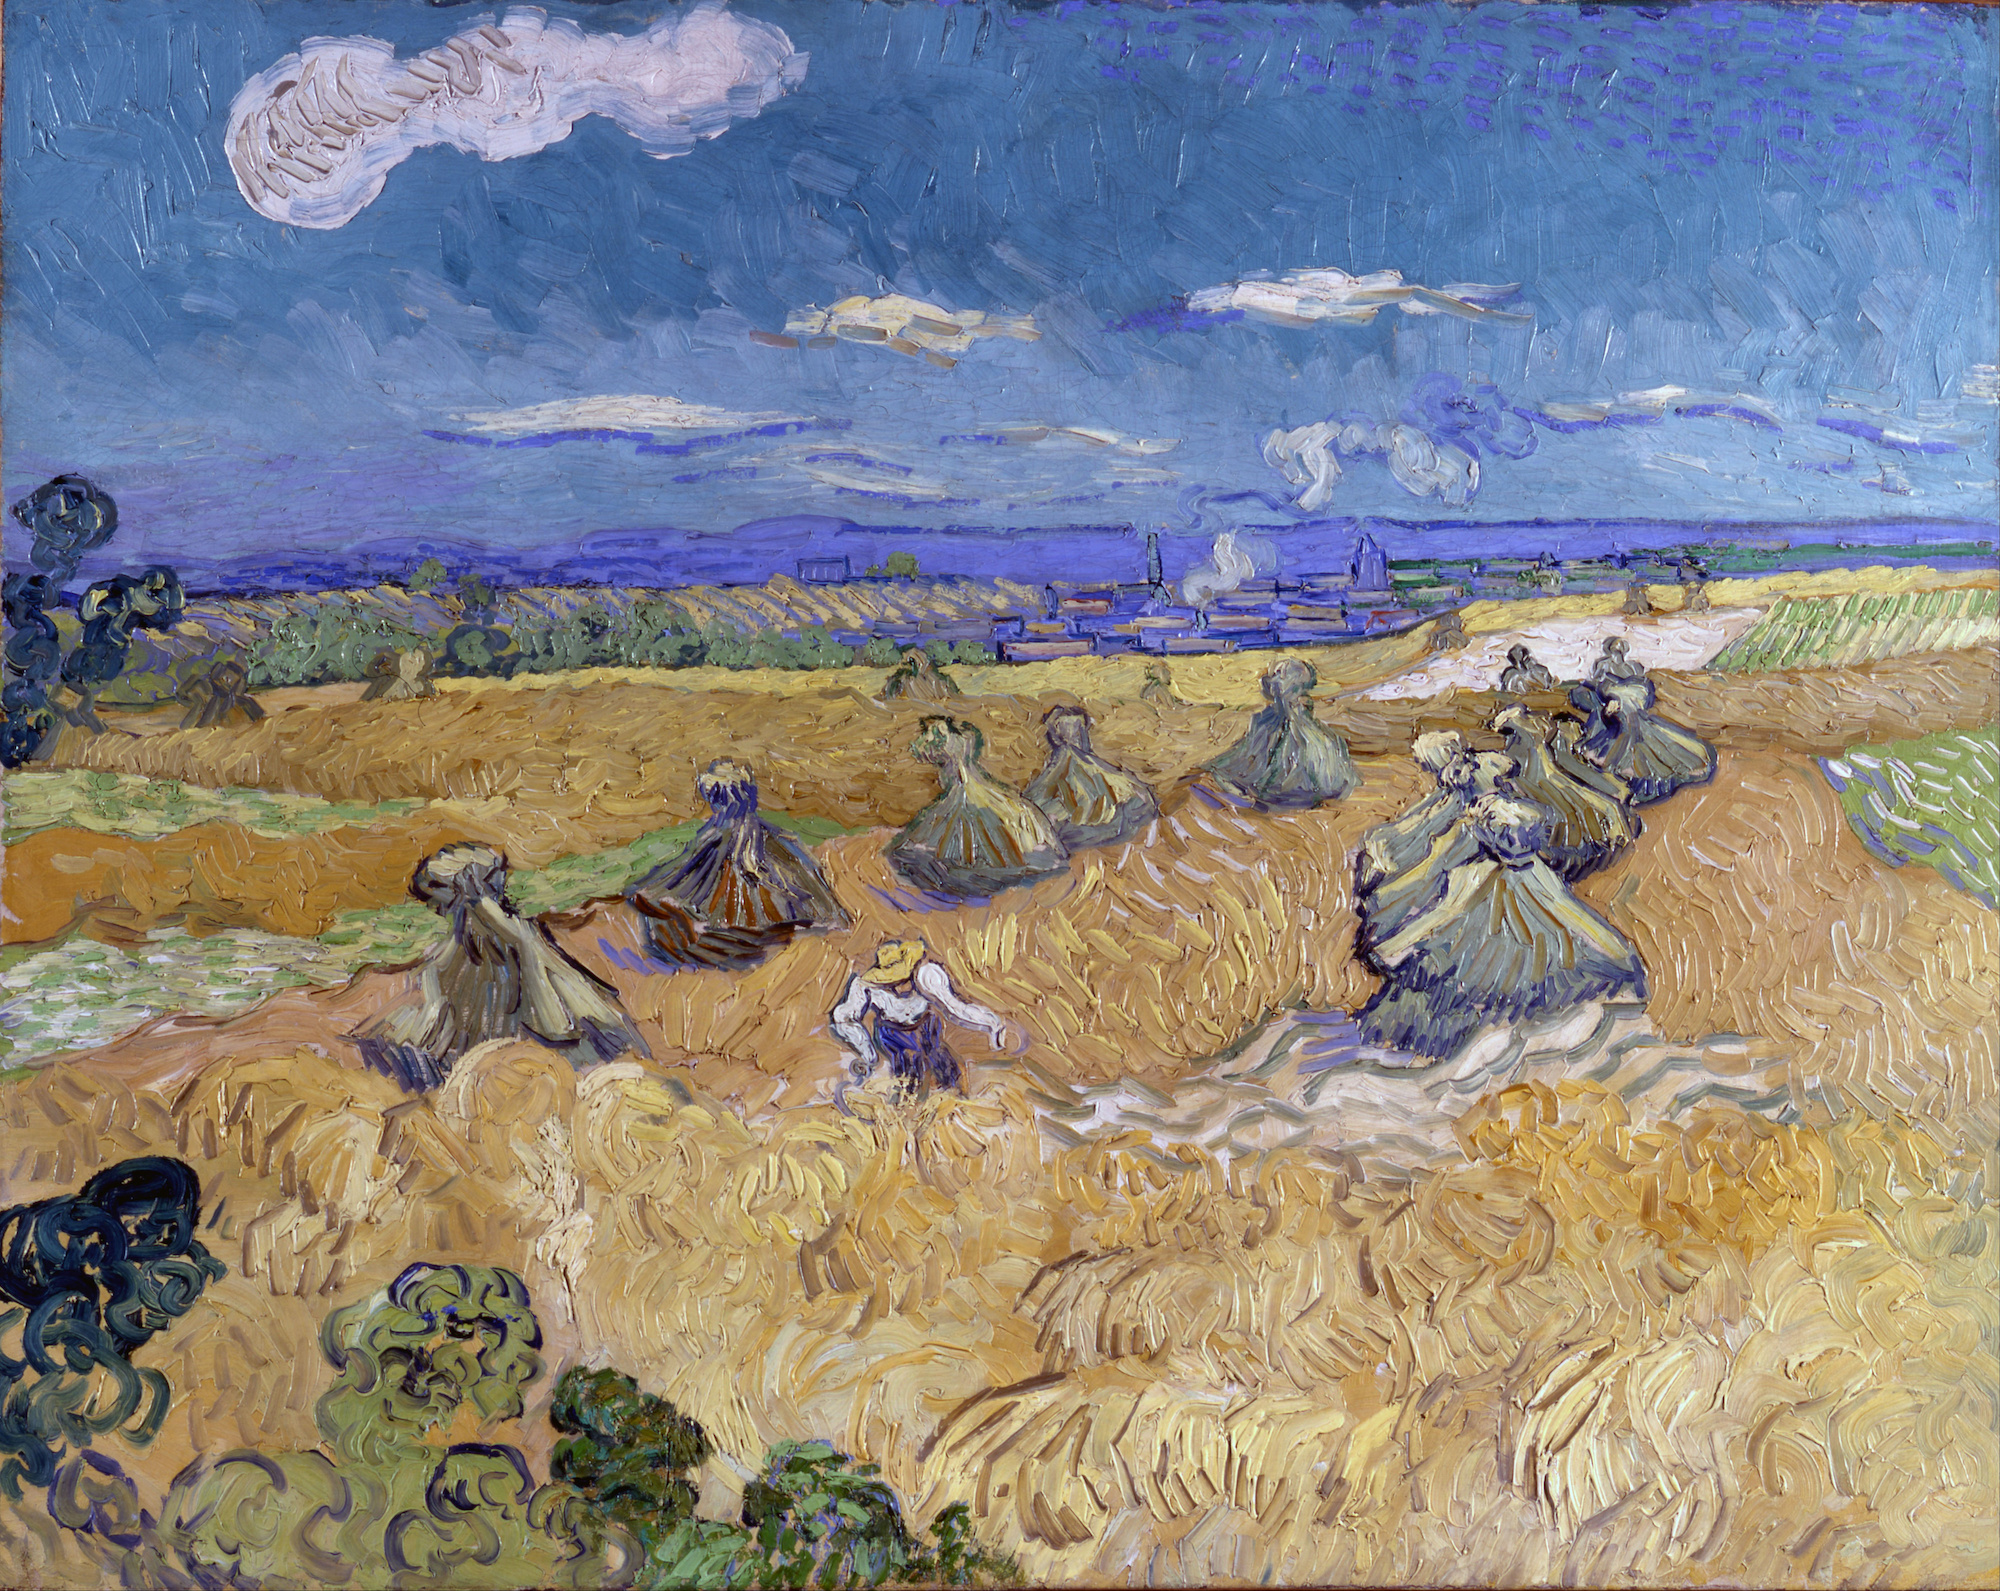 Búzamező aratóval, Auvers by Vincent van Gogh - 1890 - 73.6 x 93 cm 